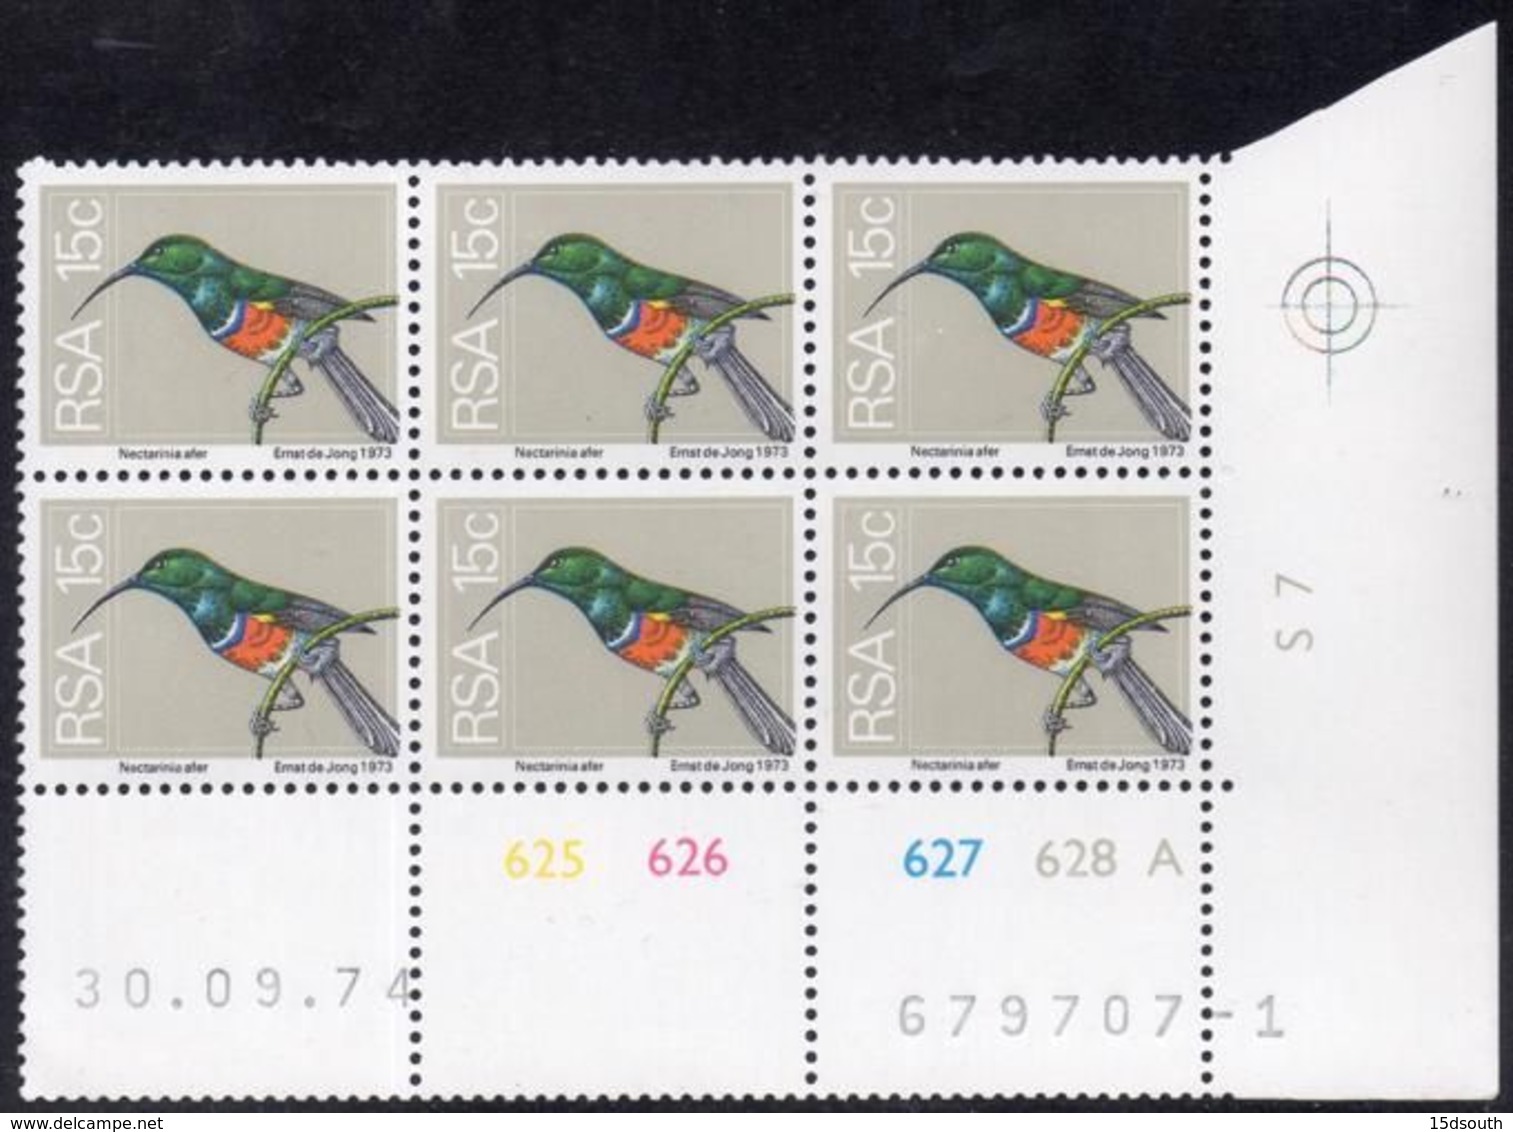 South Africa - 1974 2nd Definitive 15c Sunbird Control Block (1974.09.30) Pane A (**) # SG 358 - Blocks & Sheetlets